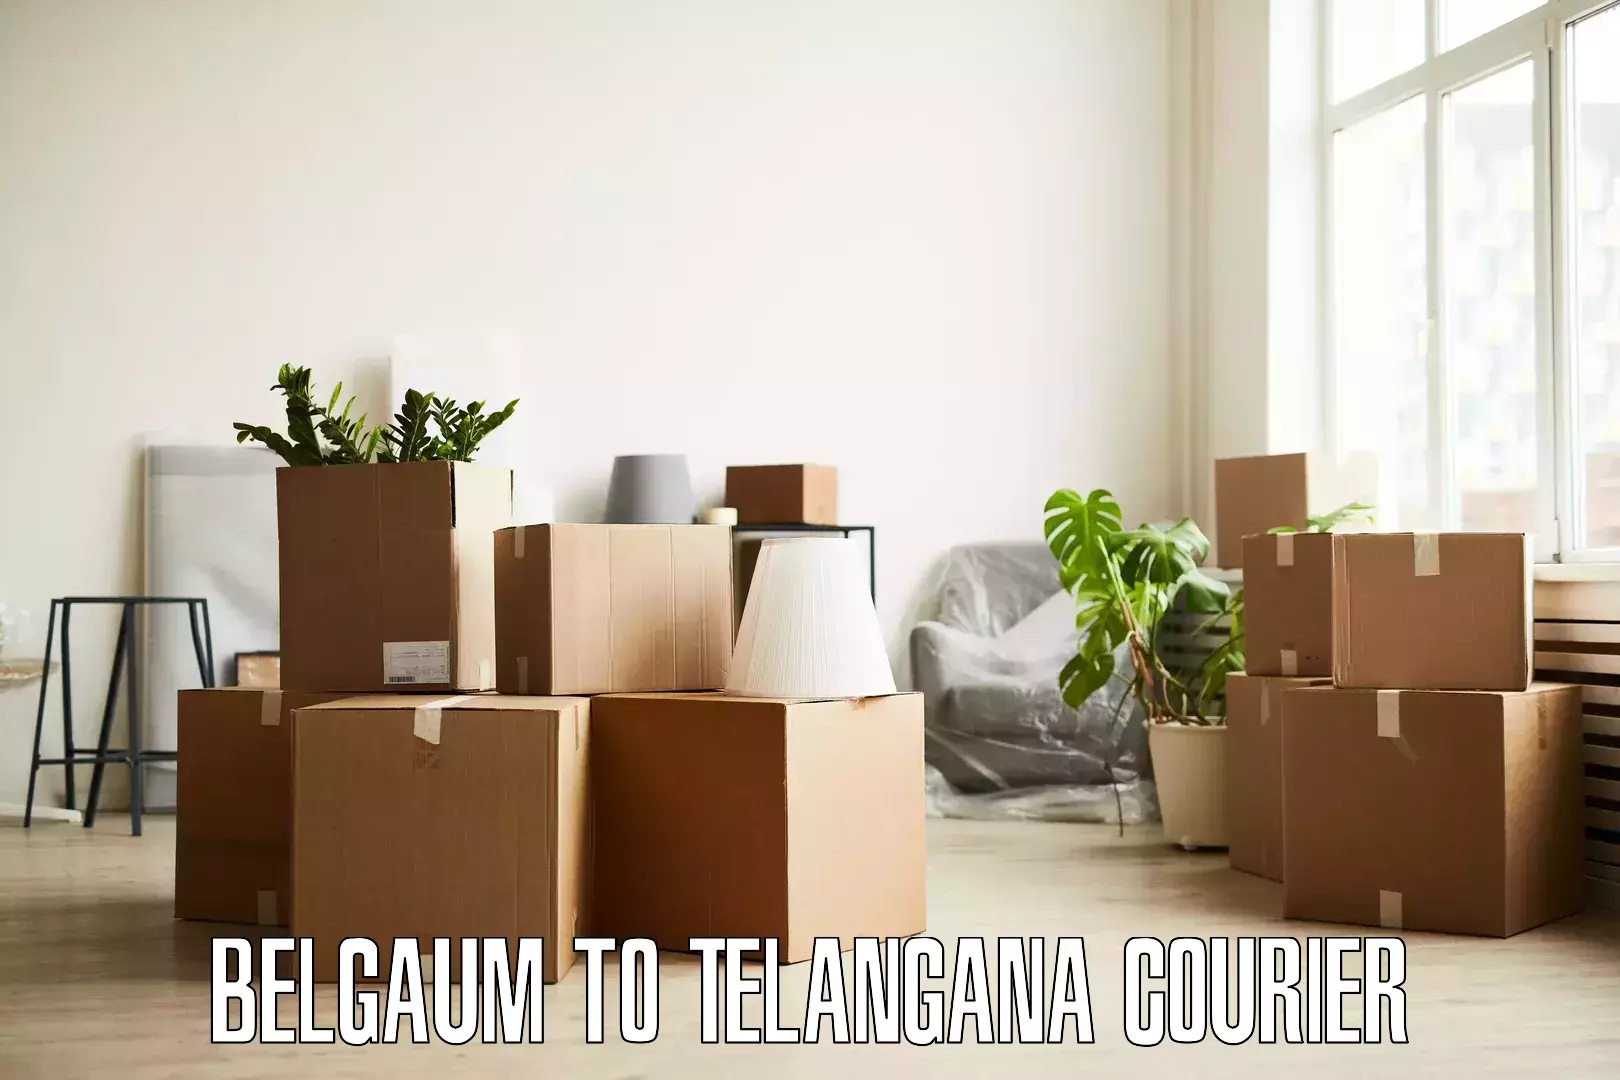 Household moving experts Belgaum to Nalgonda